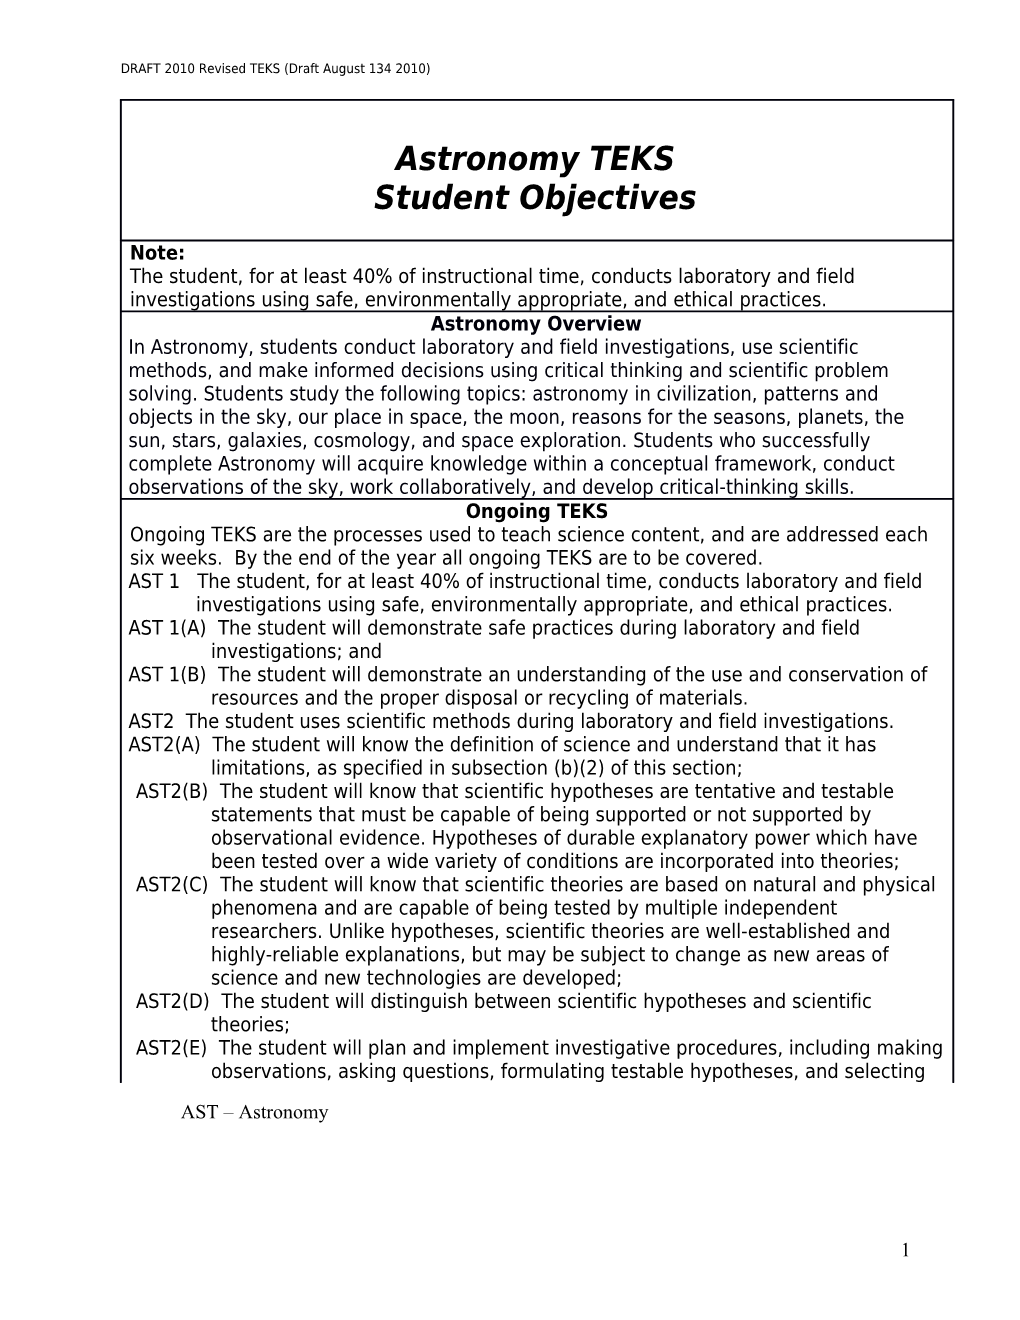 Grade 5 Student Objectives